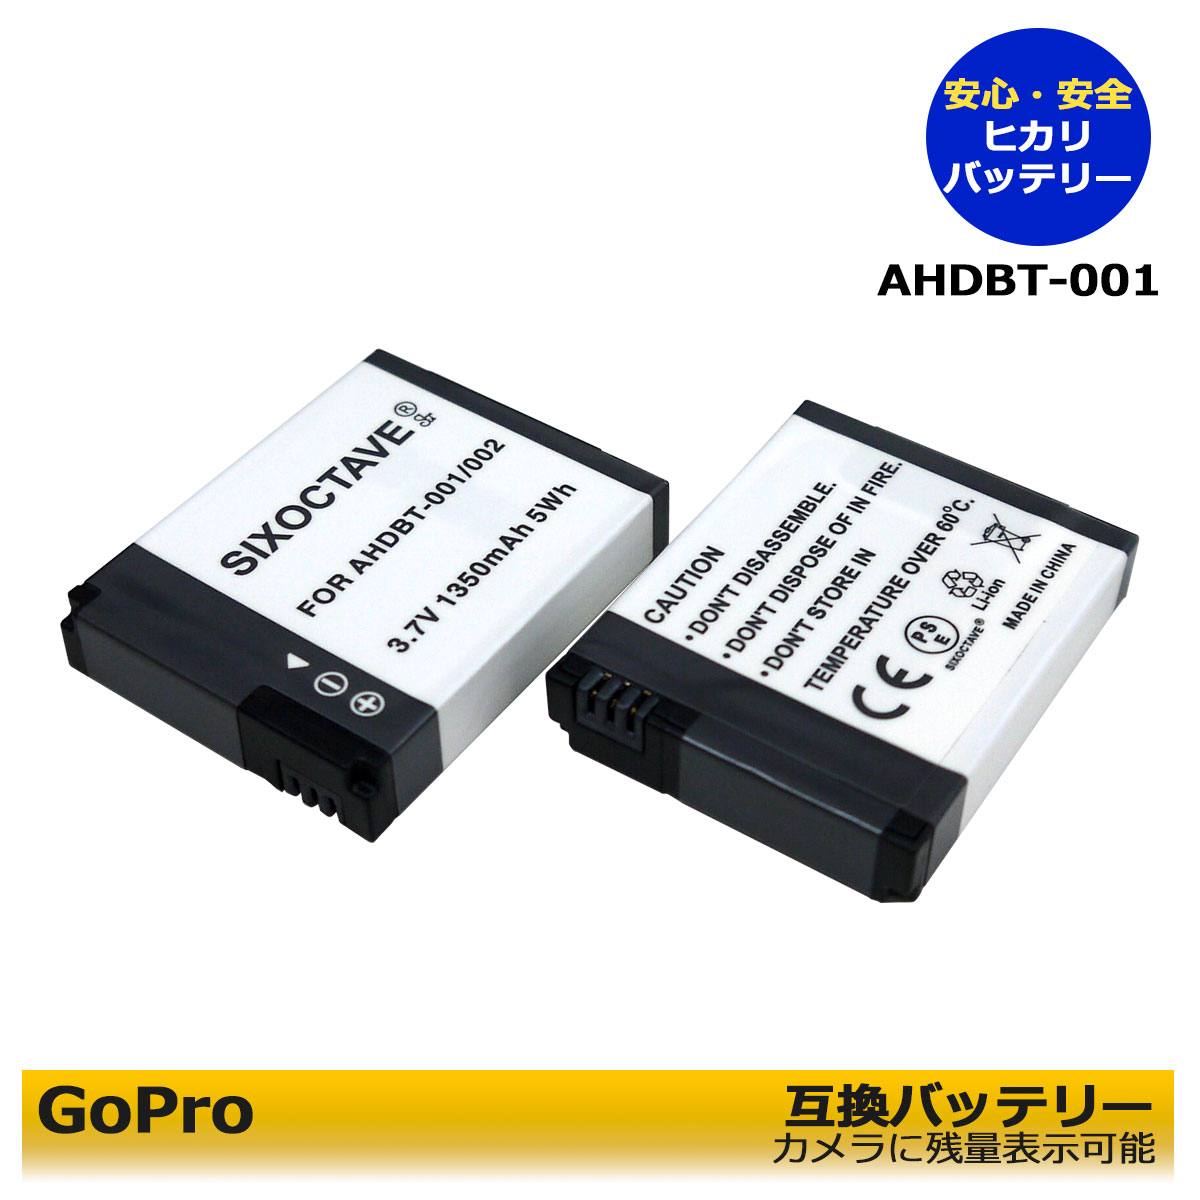 AHDBT-001 / AHDBT-002【あす楽対応】GoPro 互換バッテリー 2個（カメラ本体で残量表示可能）HERO オリジナル / GoPro HERO1 / GoPro HERO2 純正充電器で充電可能 カメラ用アクセサリー